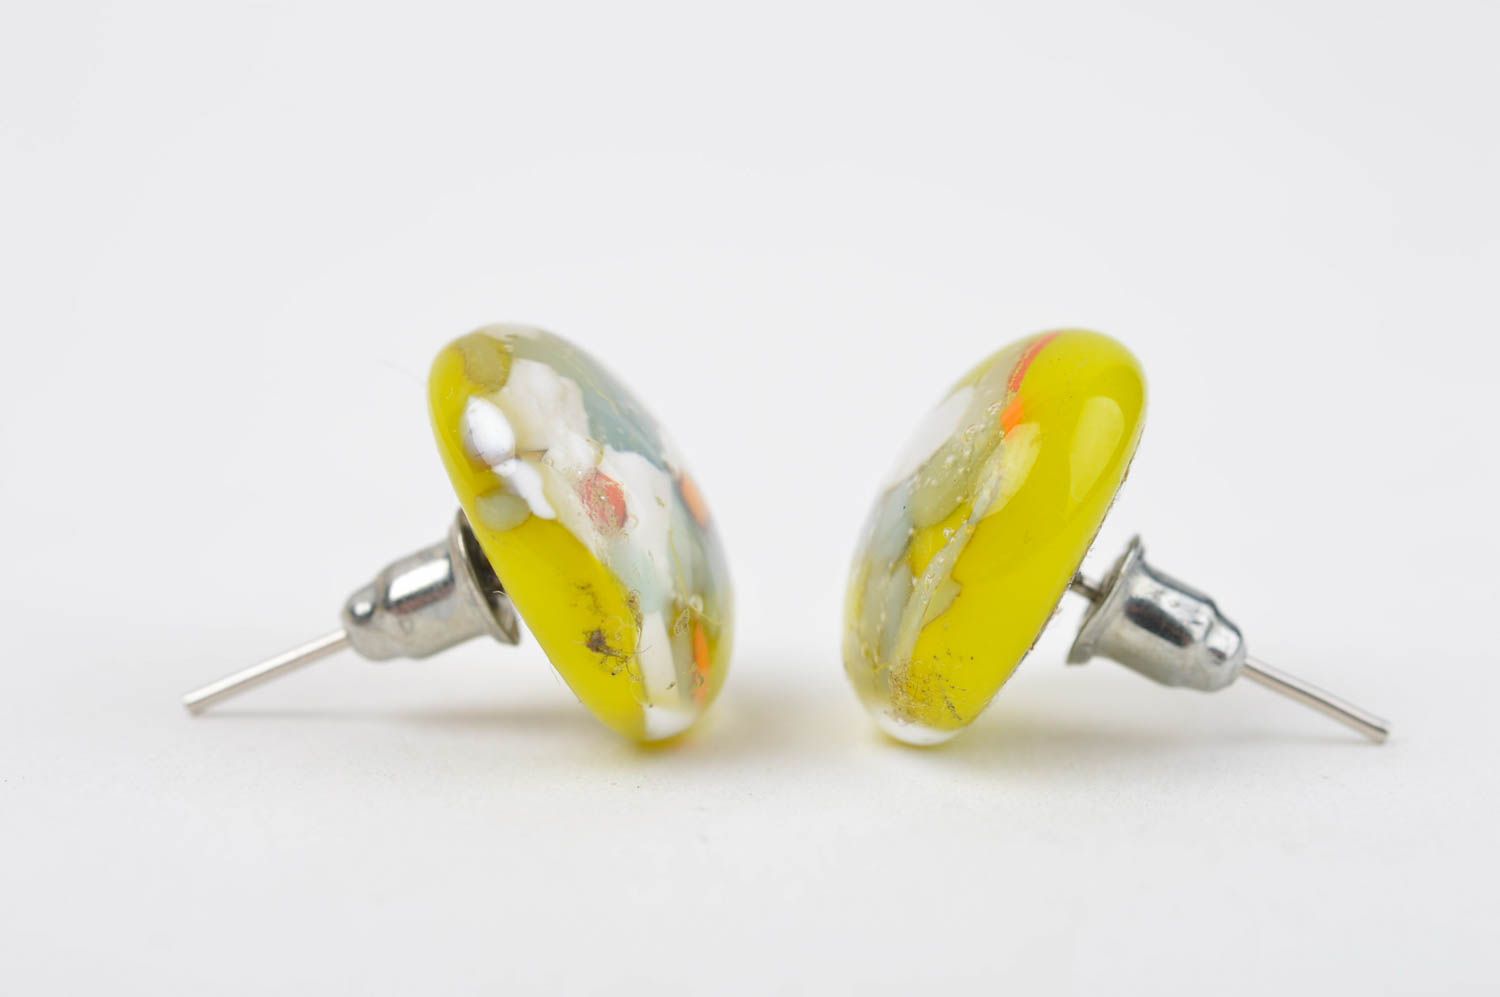 Stylish handmade glass earrings glass fusing cool jewelry designs gift ideas photo 3